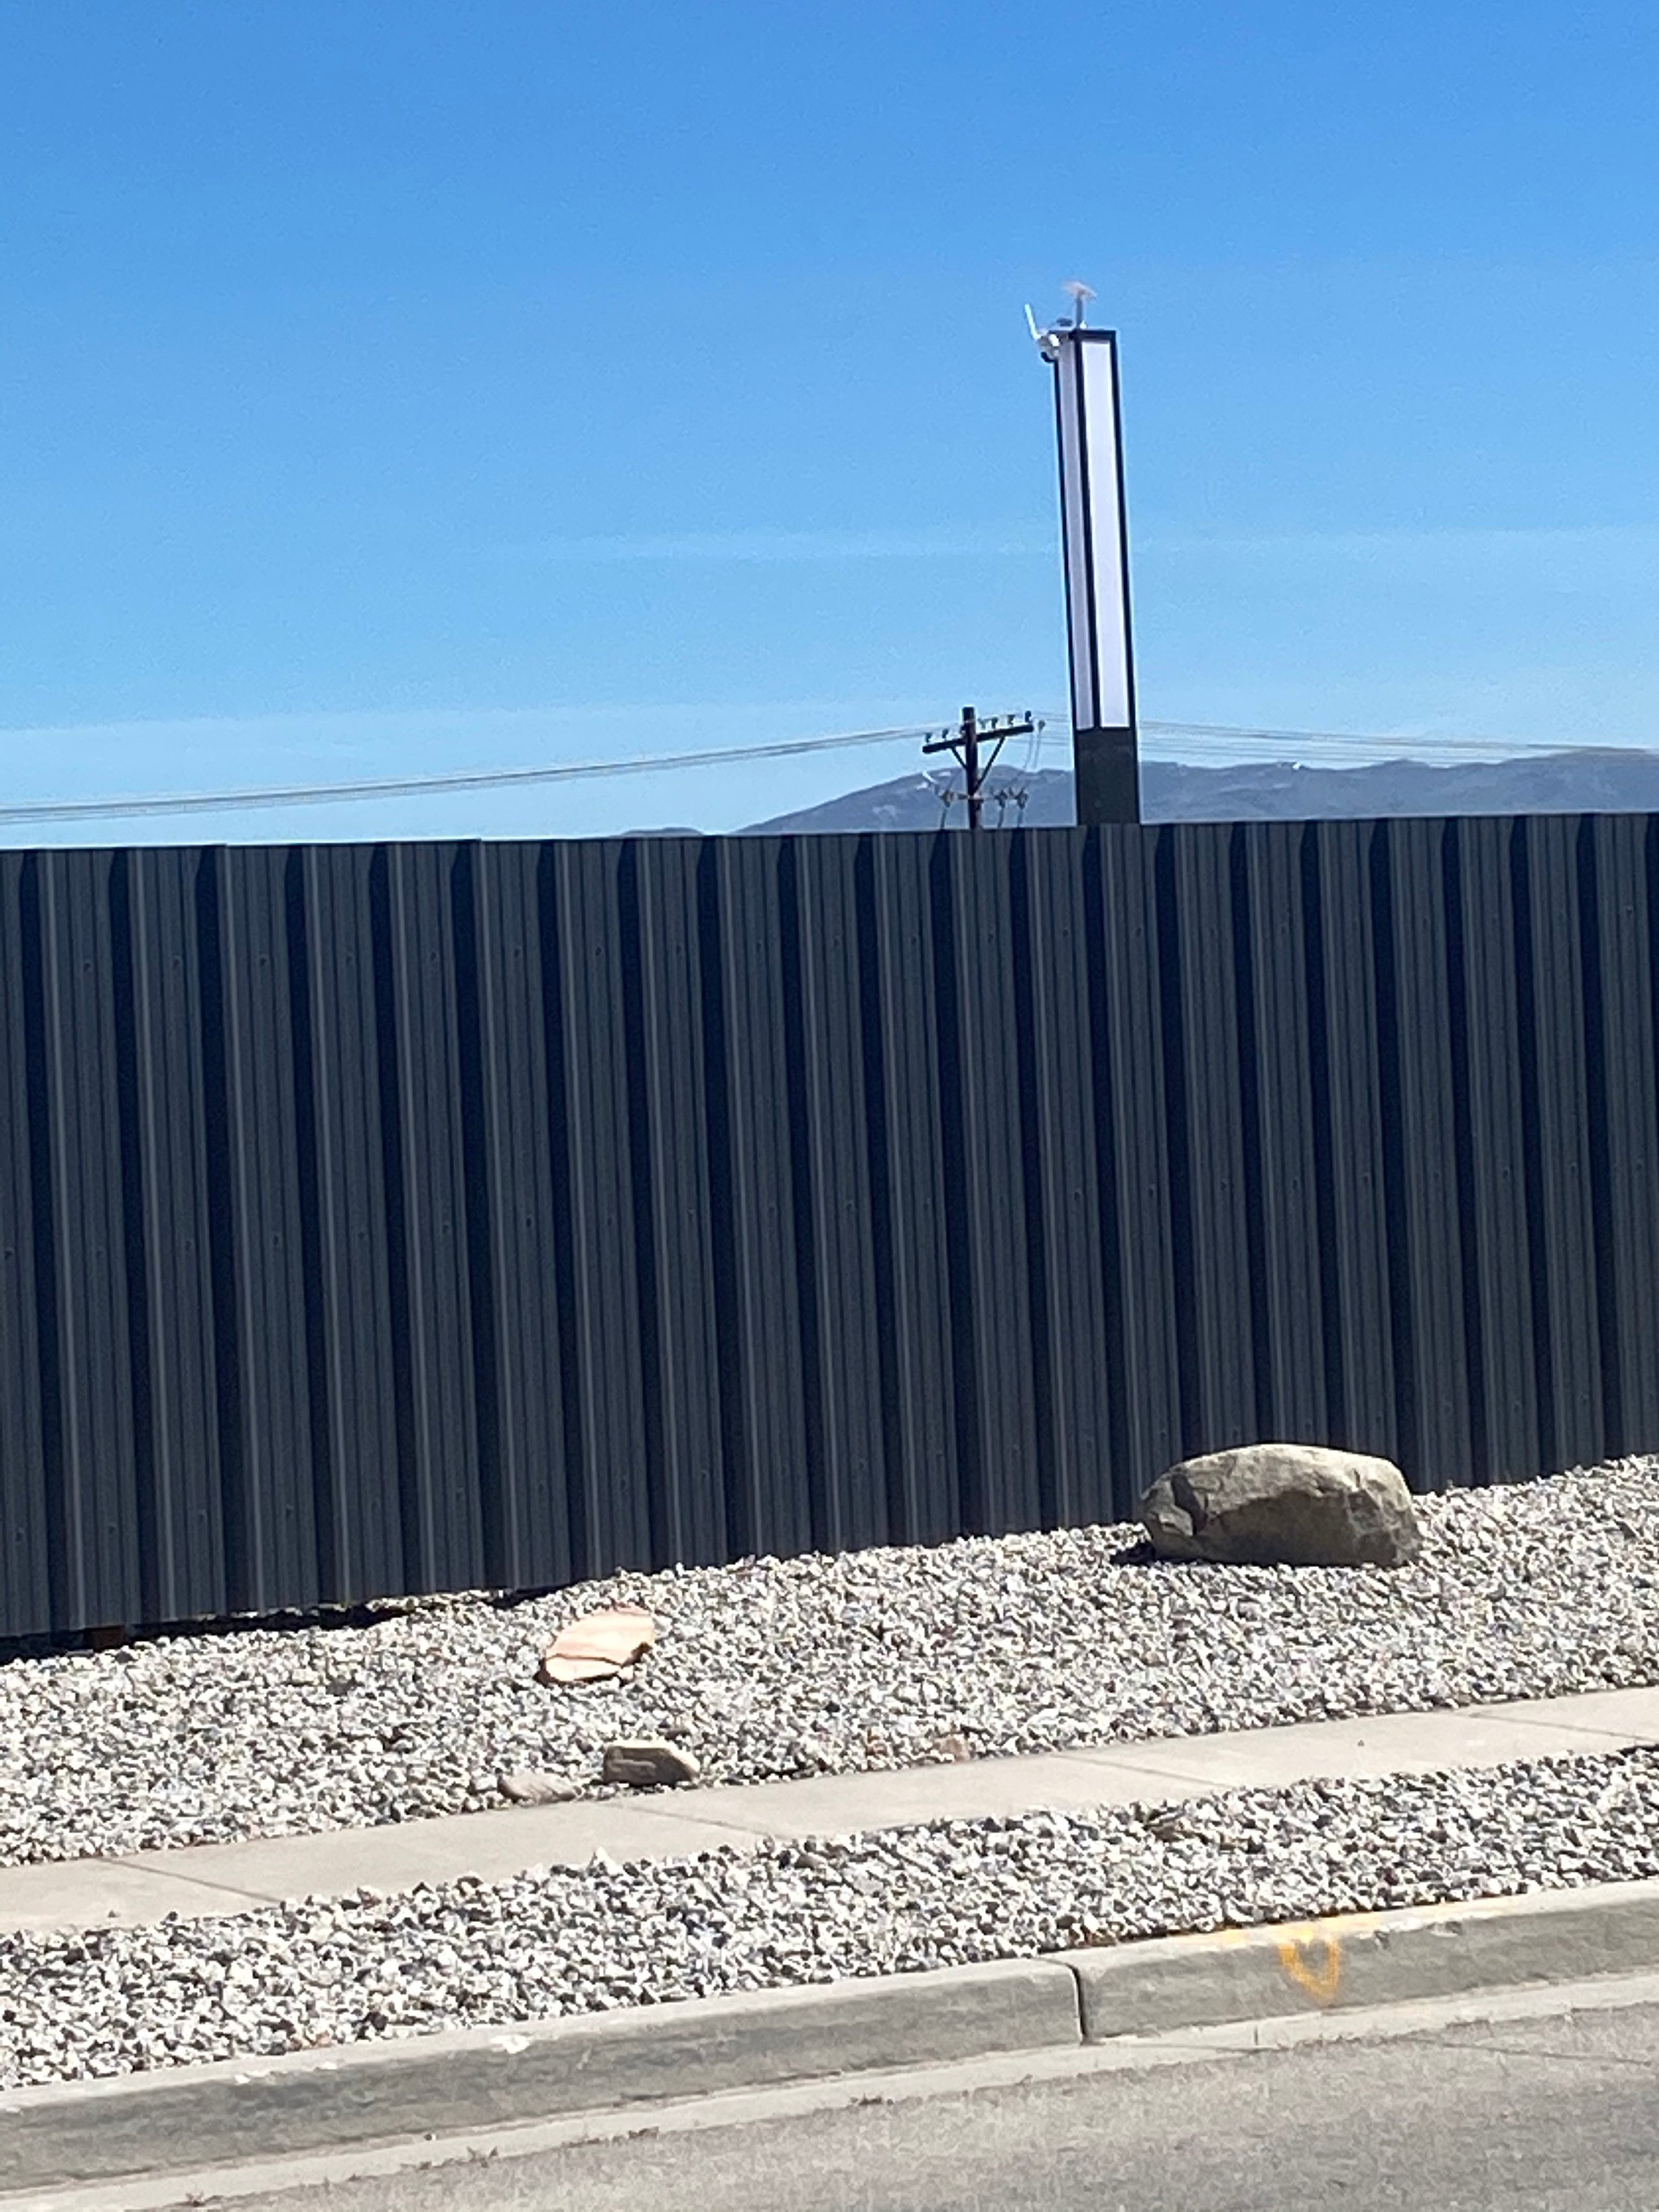 55x60 Unpaved Lot self storage unit in Salt Lake City, UT